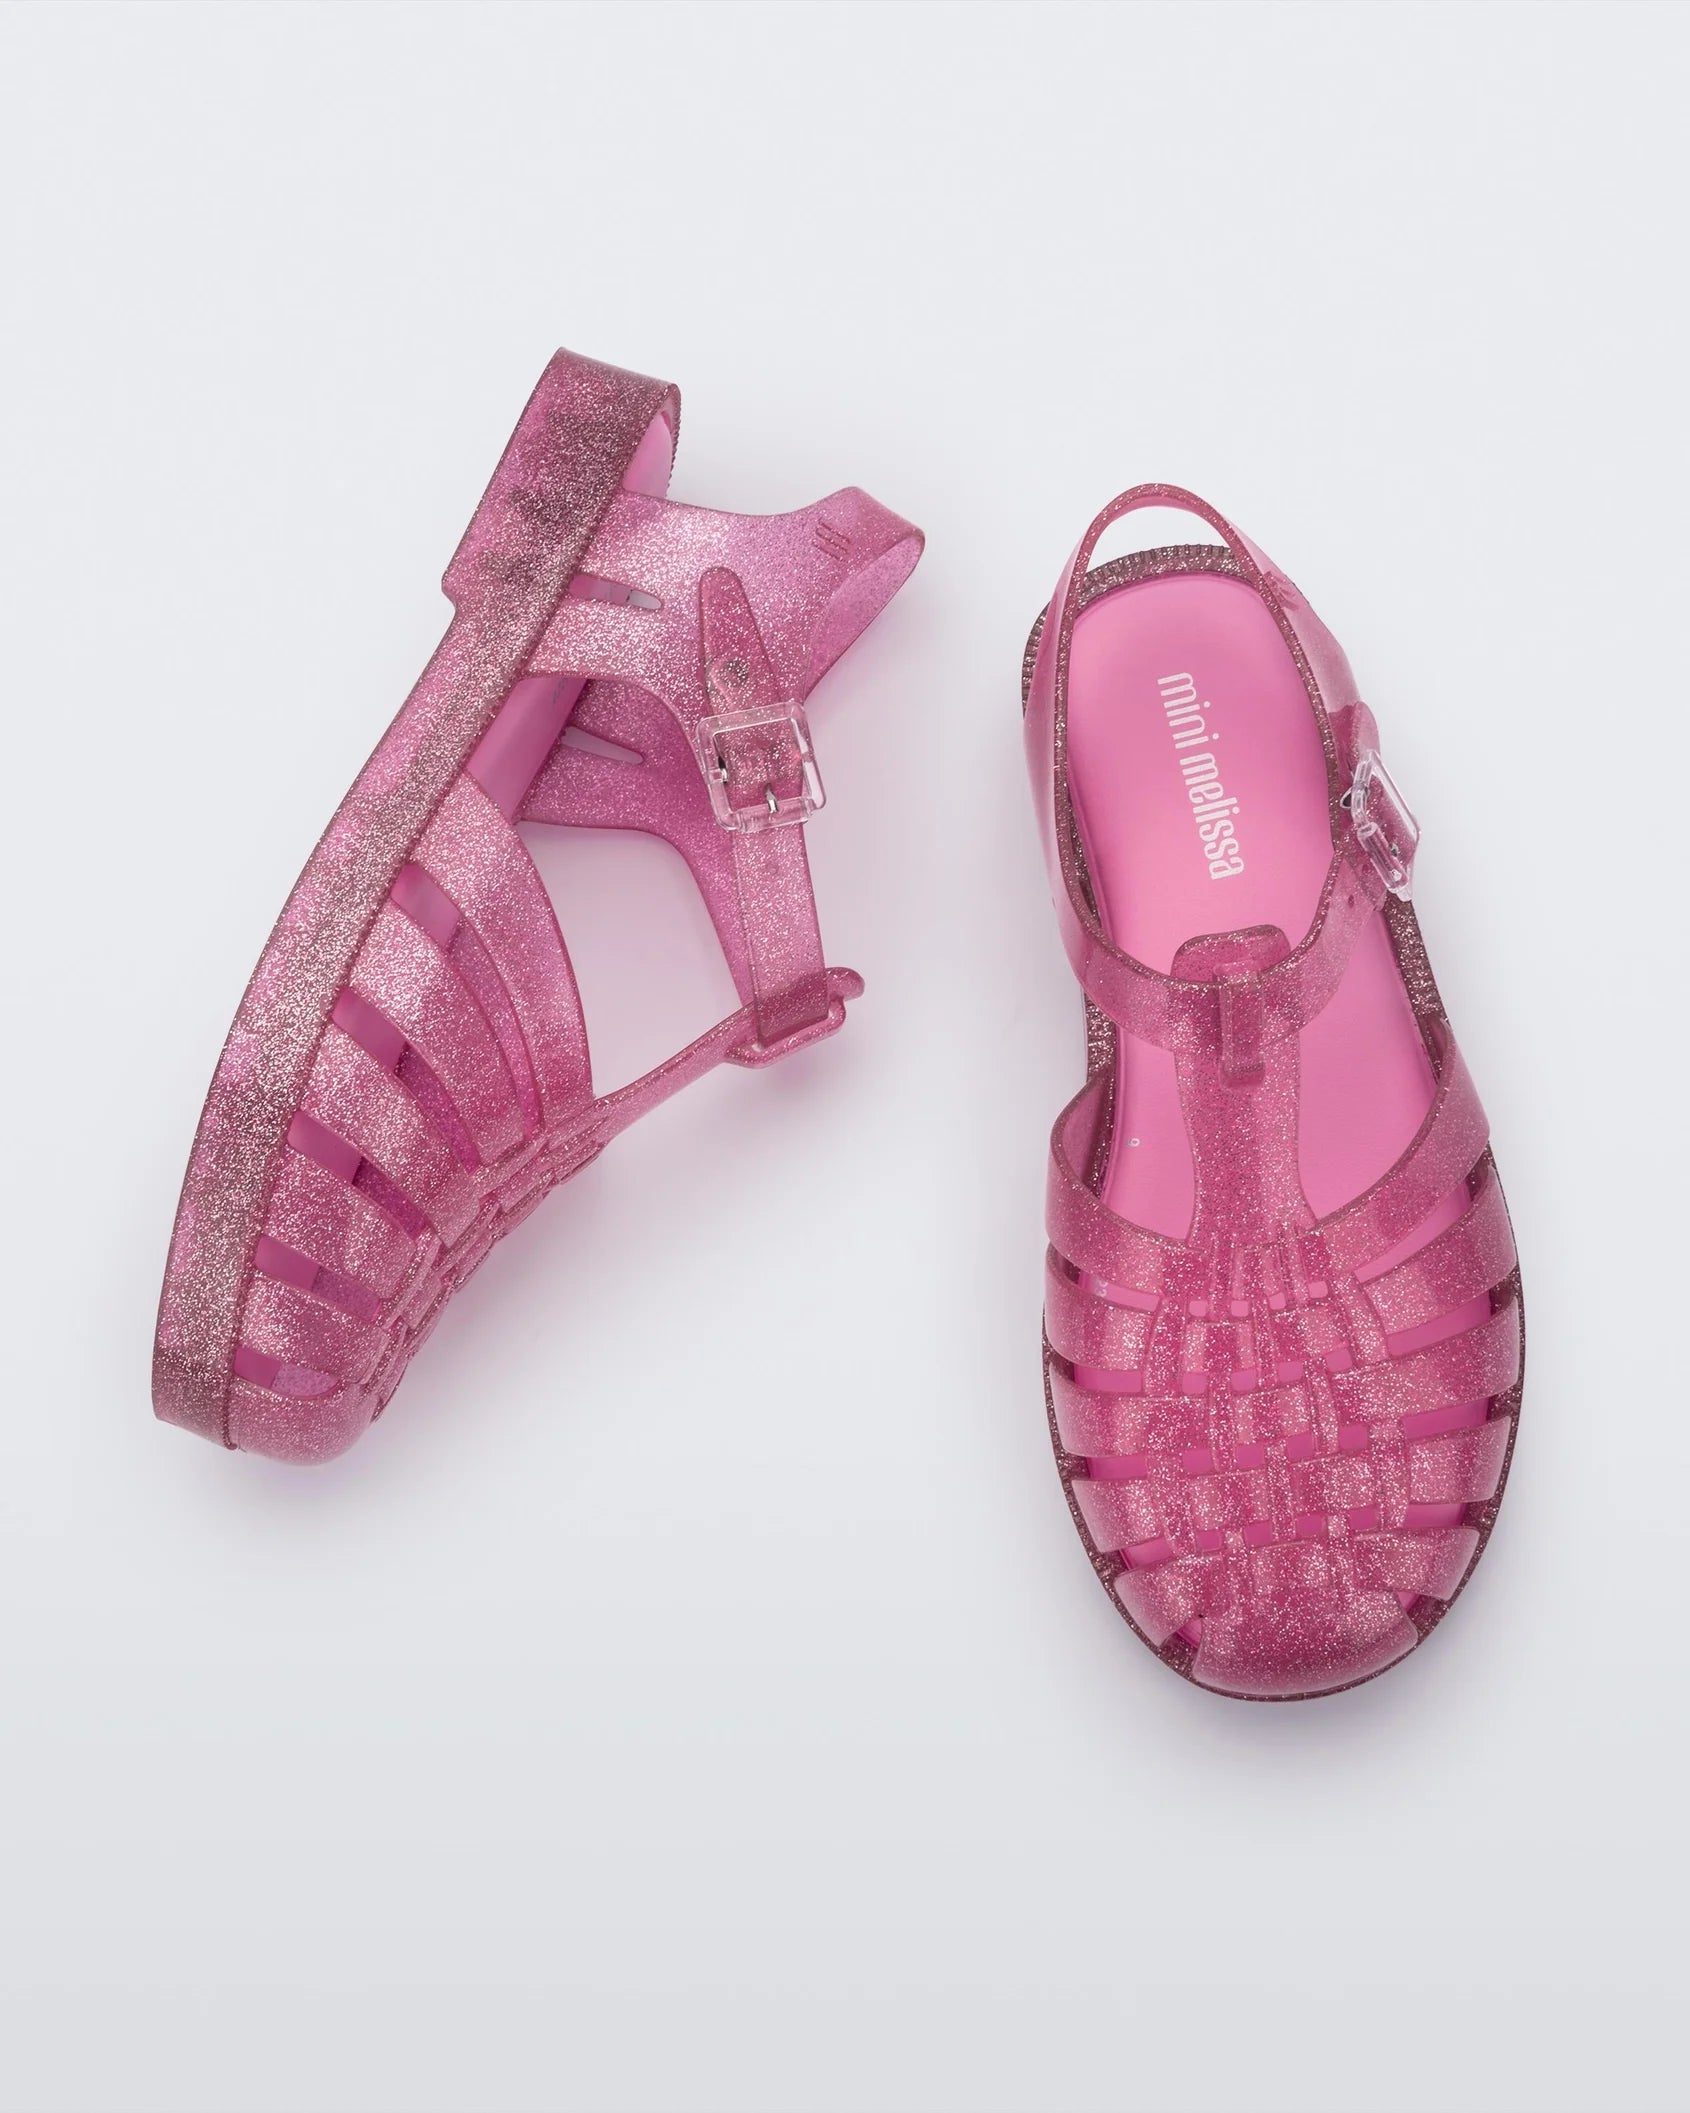 Possession Sandals- Glitter Pink